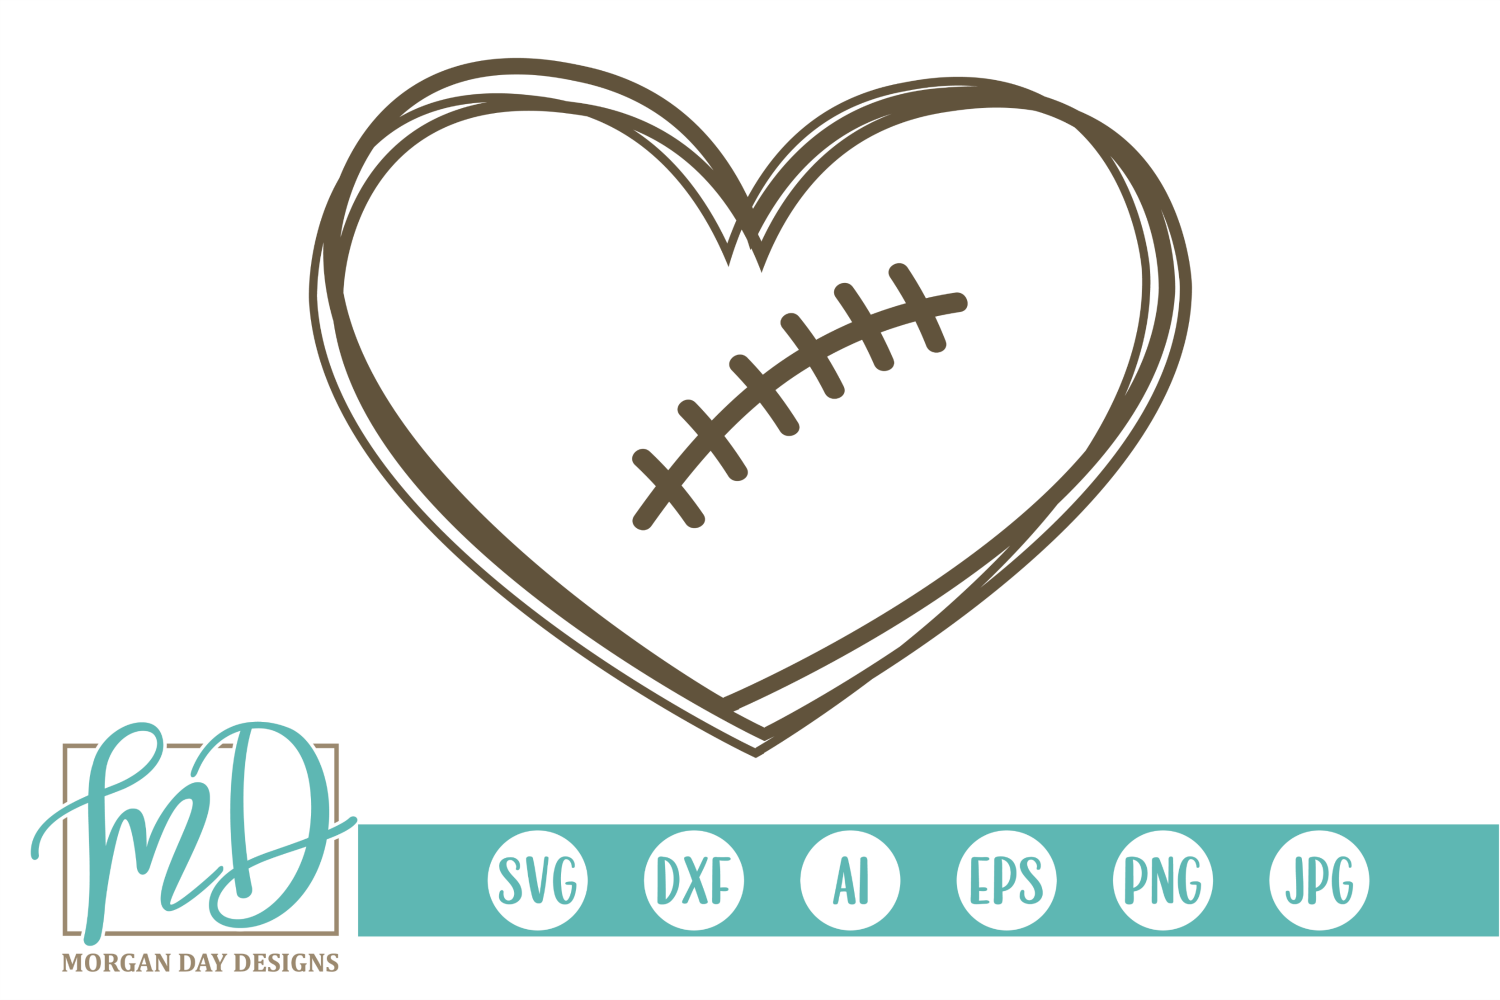 Football Heart - Football SVG, DXF, AI, EPS, PNG, JPEG